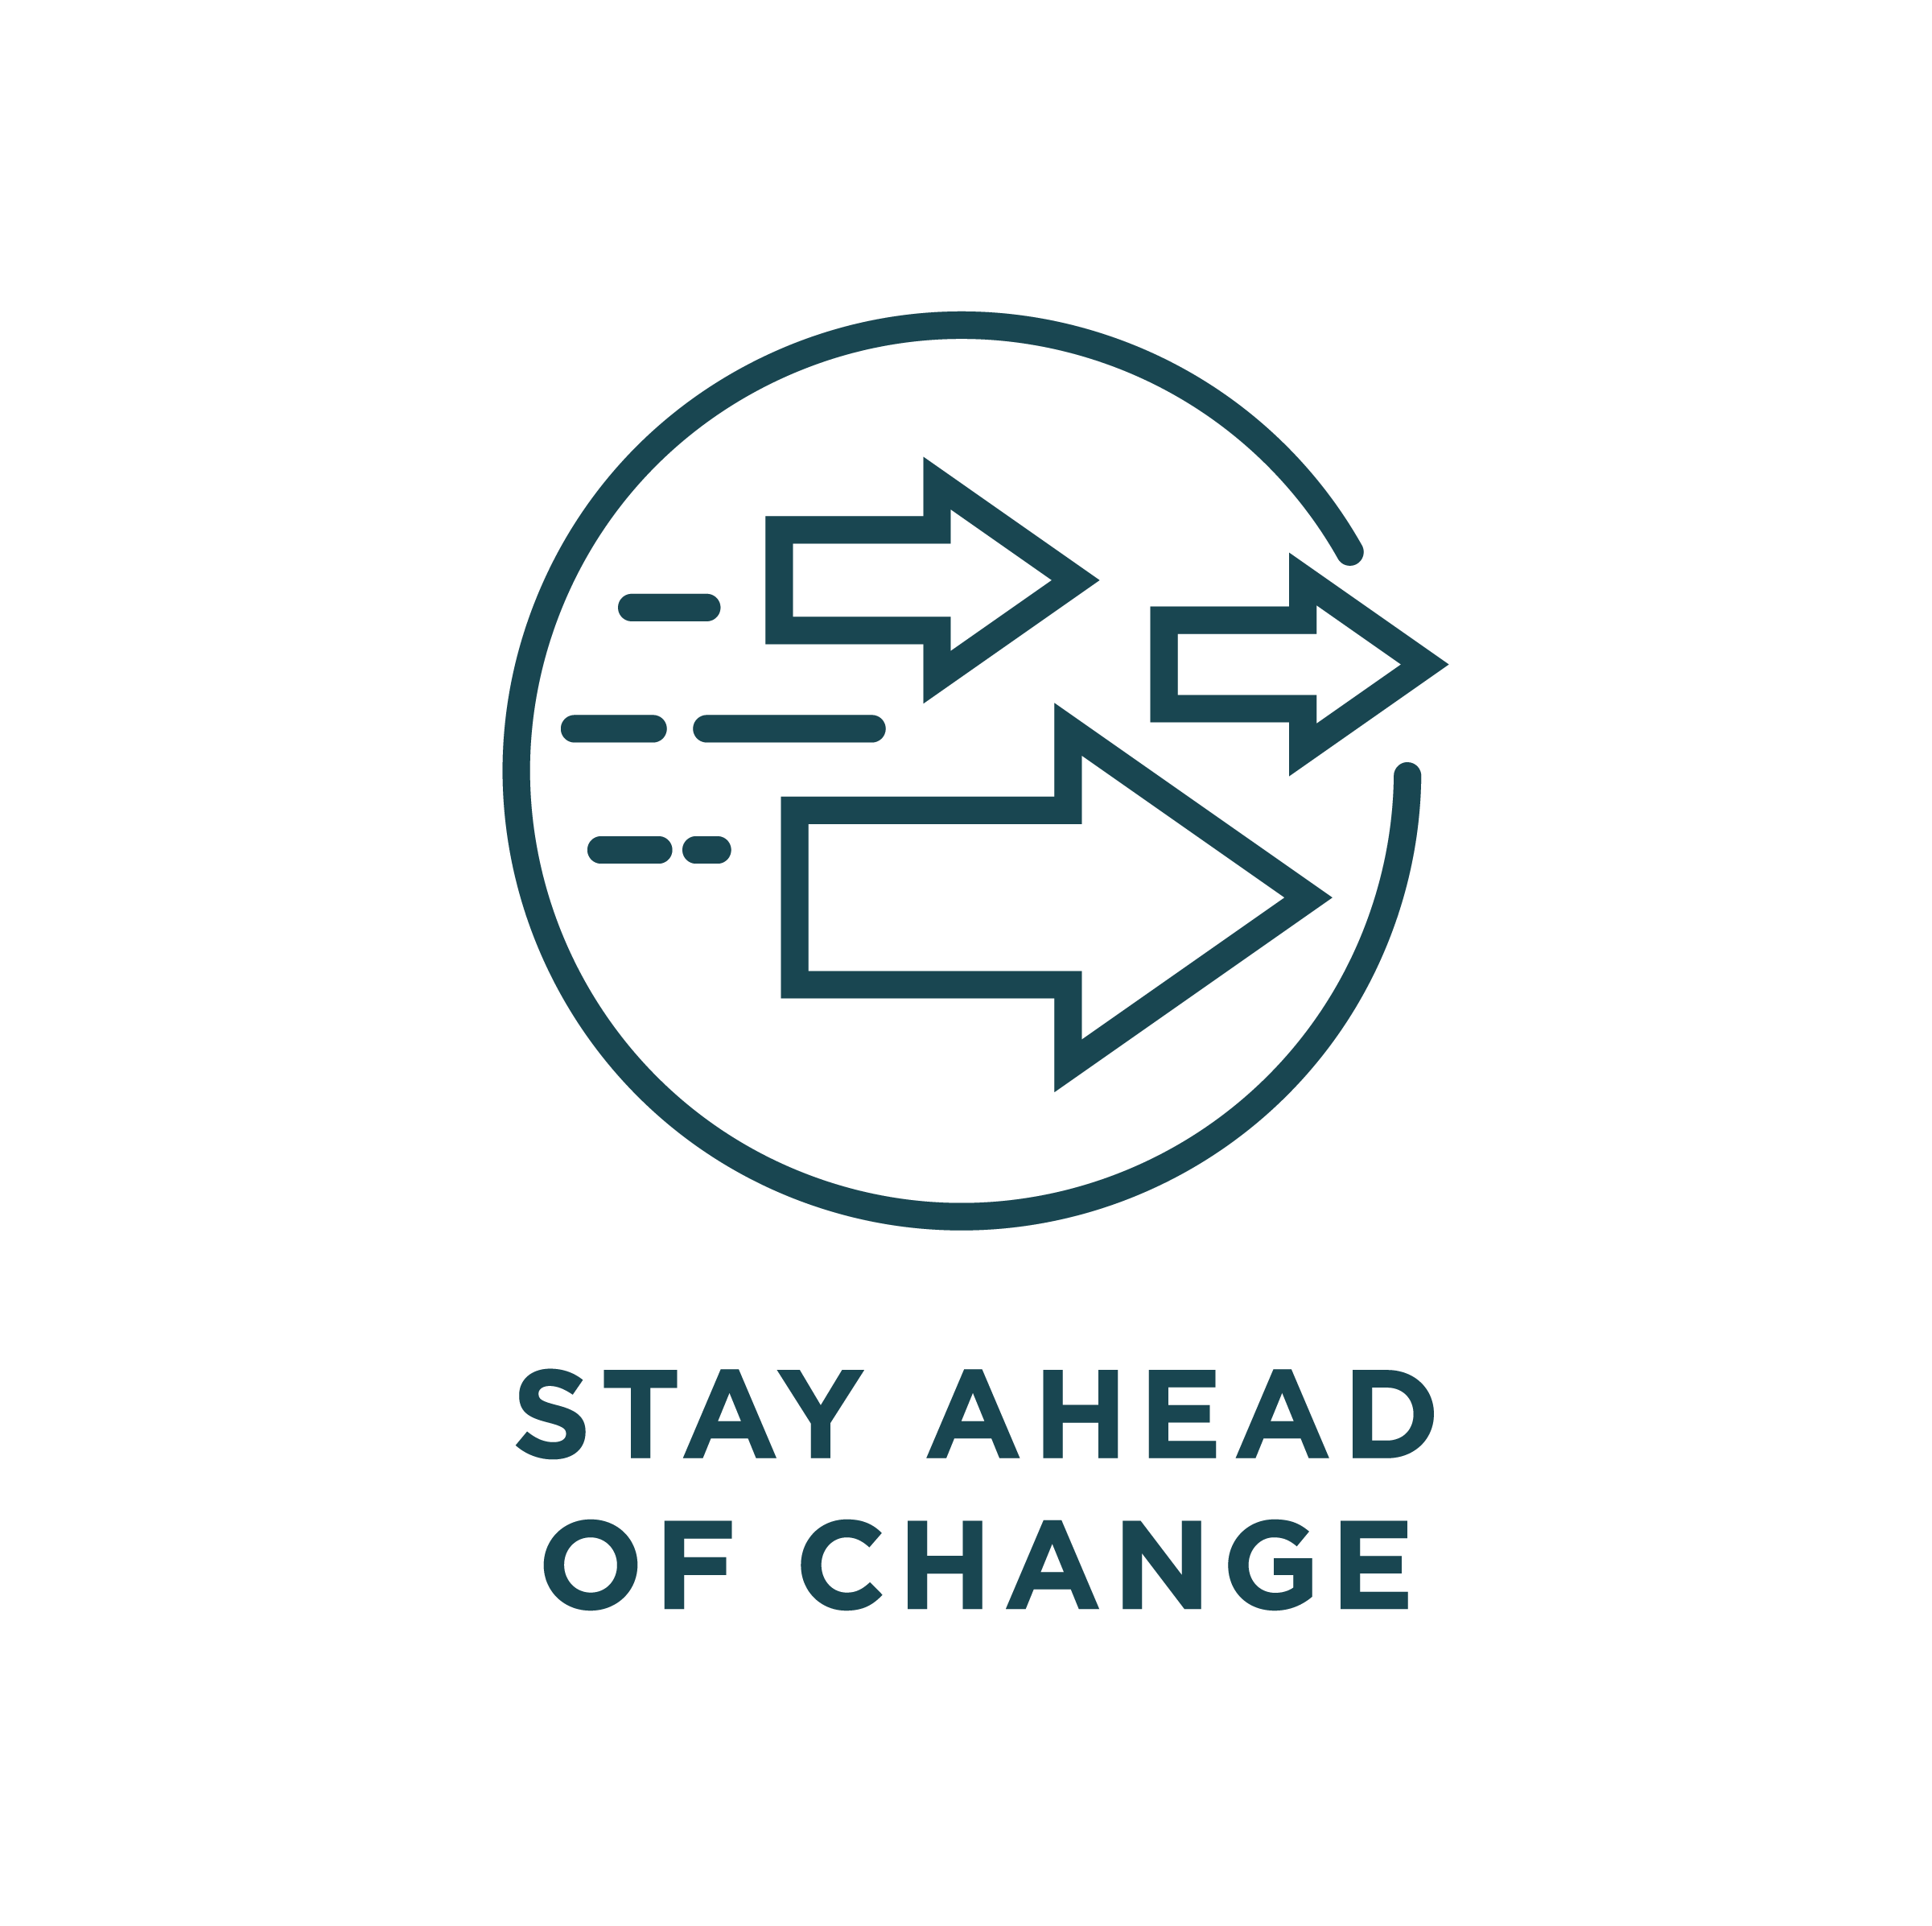 Stay ahead of change logo